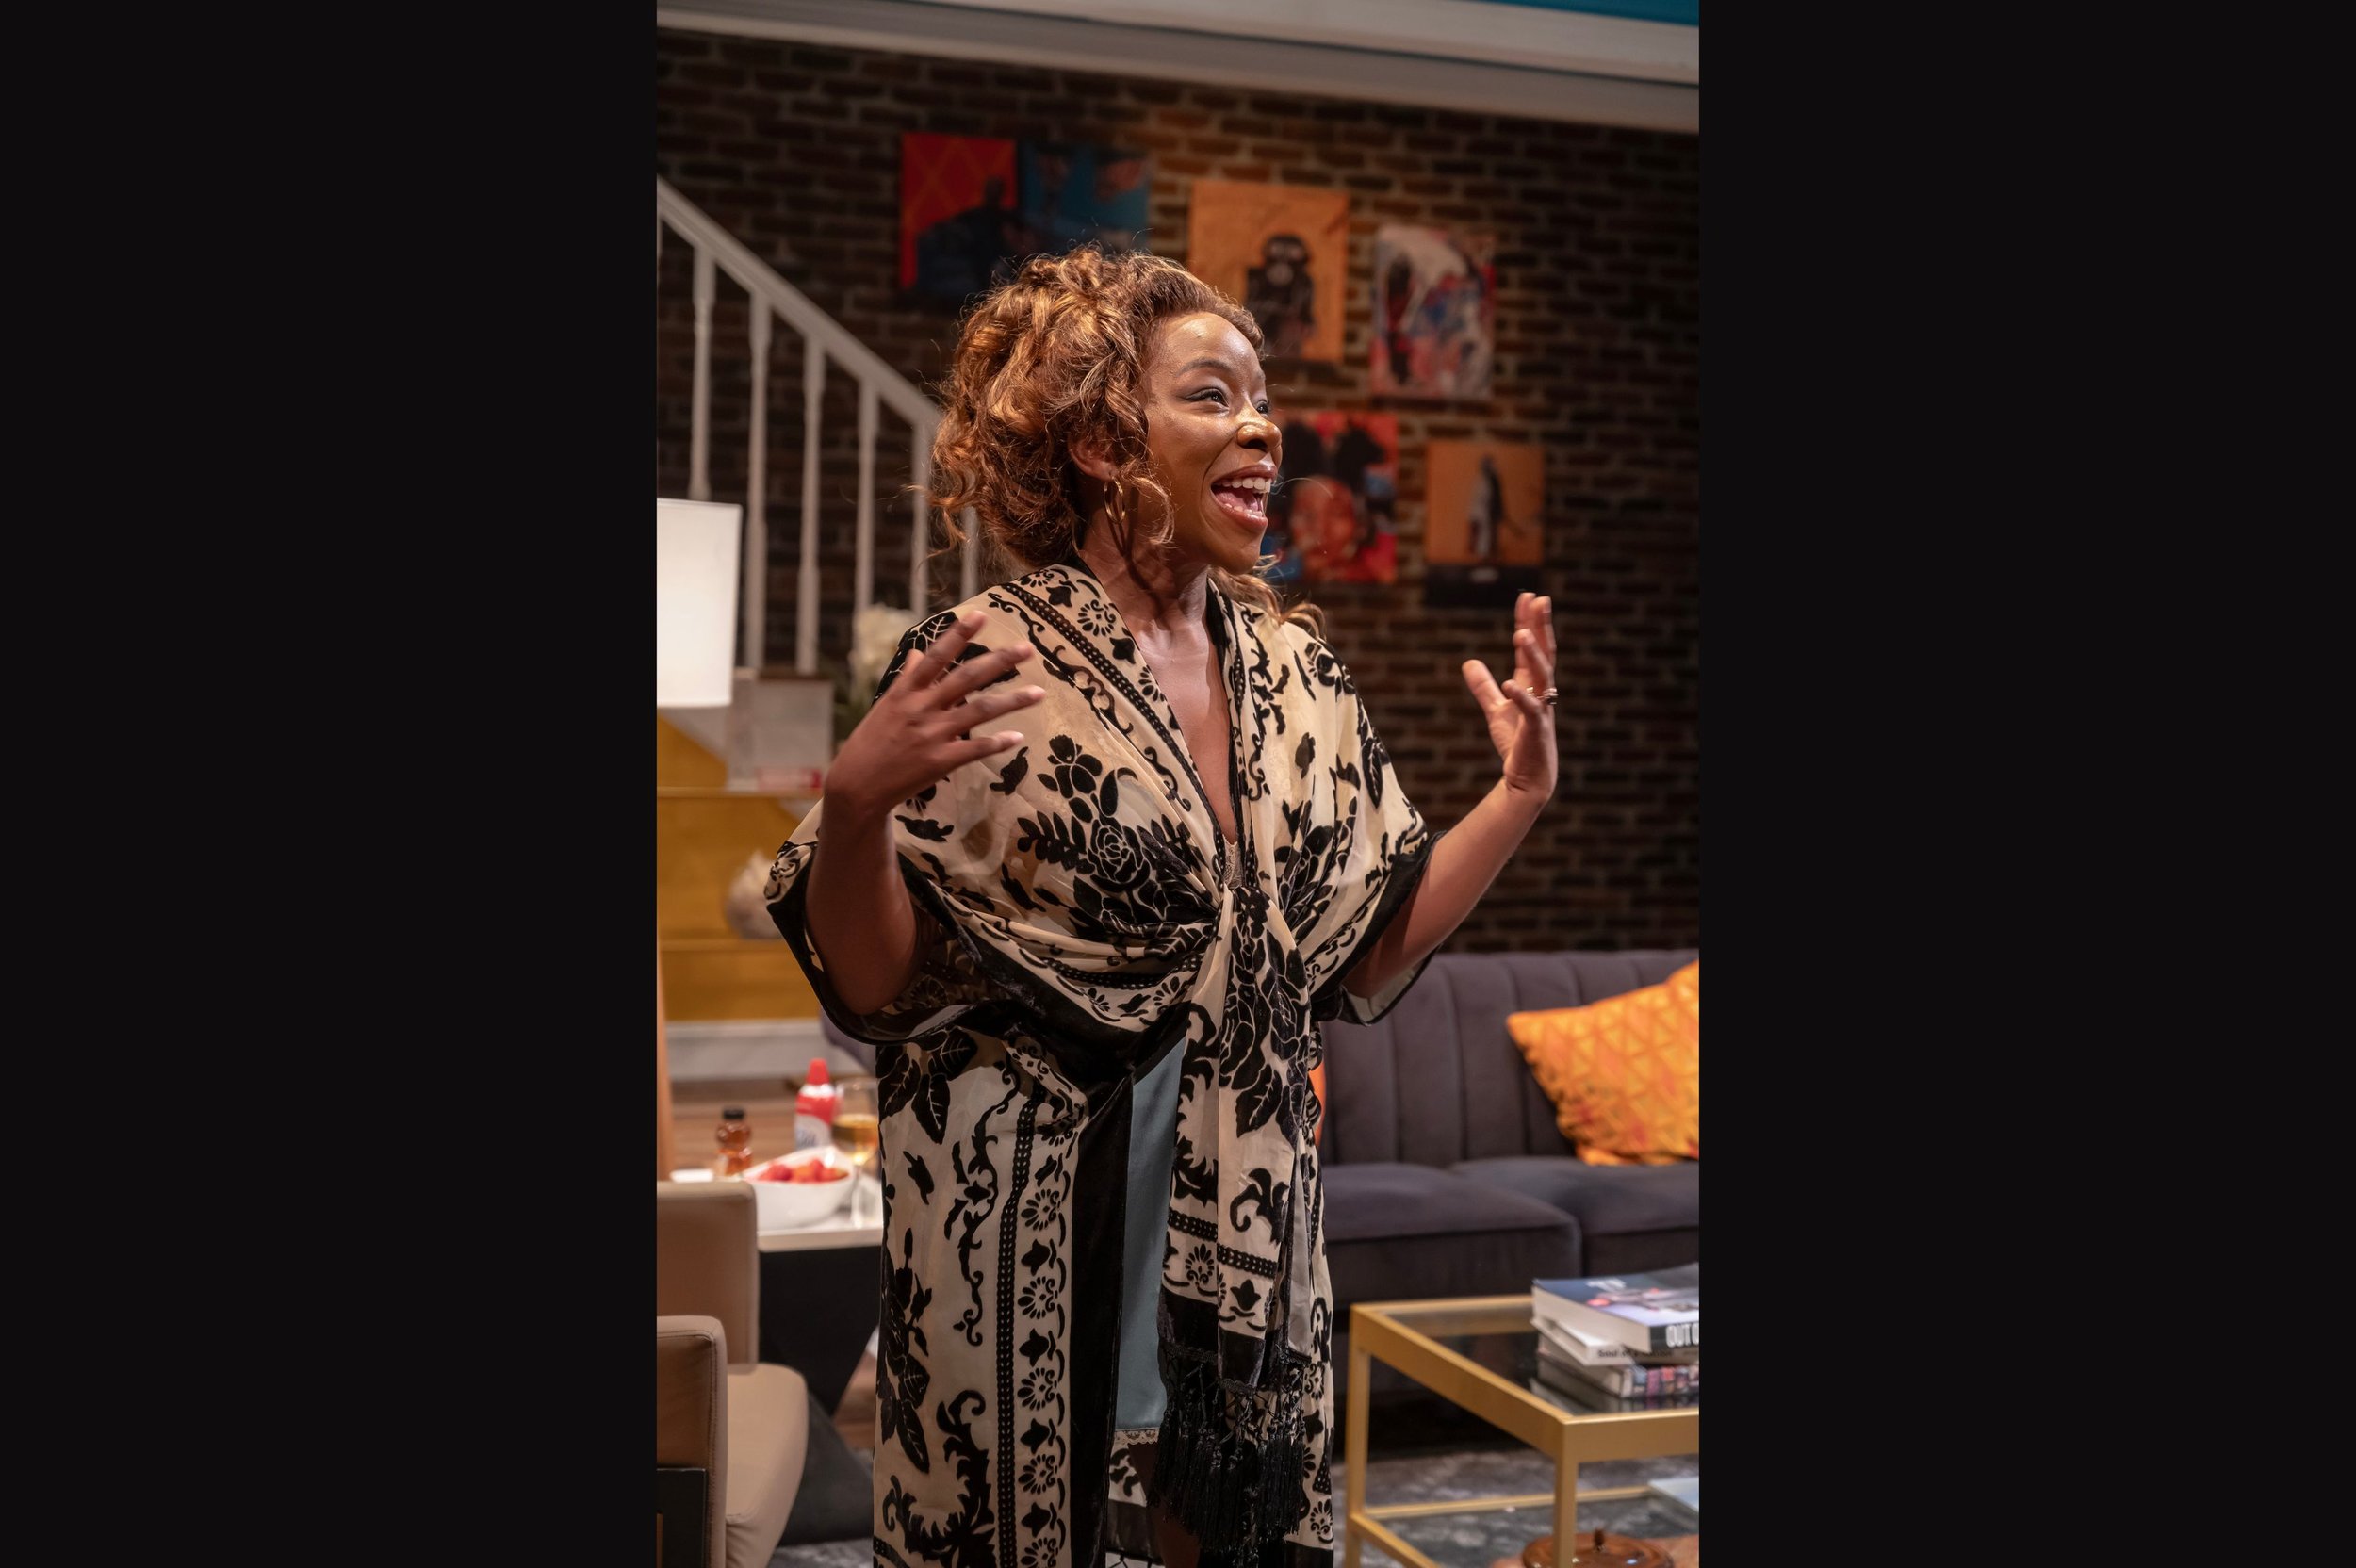   Renee Elizabeth Wilson as Brenda in Mosaic Theater’s production of  Monumental Travesties  by Psalmayene 24. Photo by Chris Banks.  